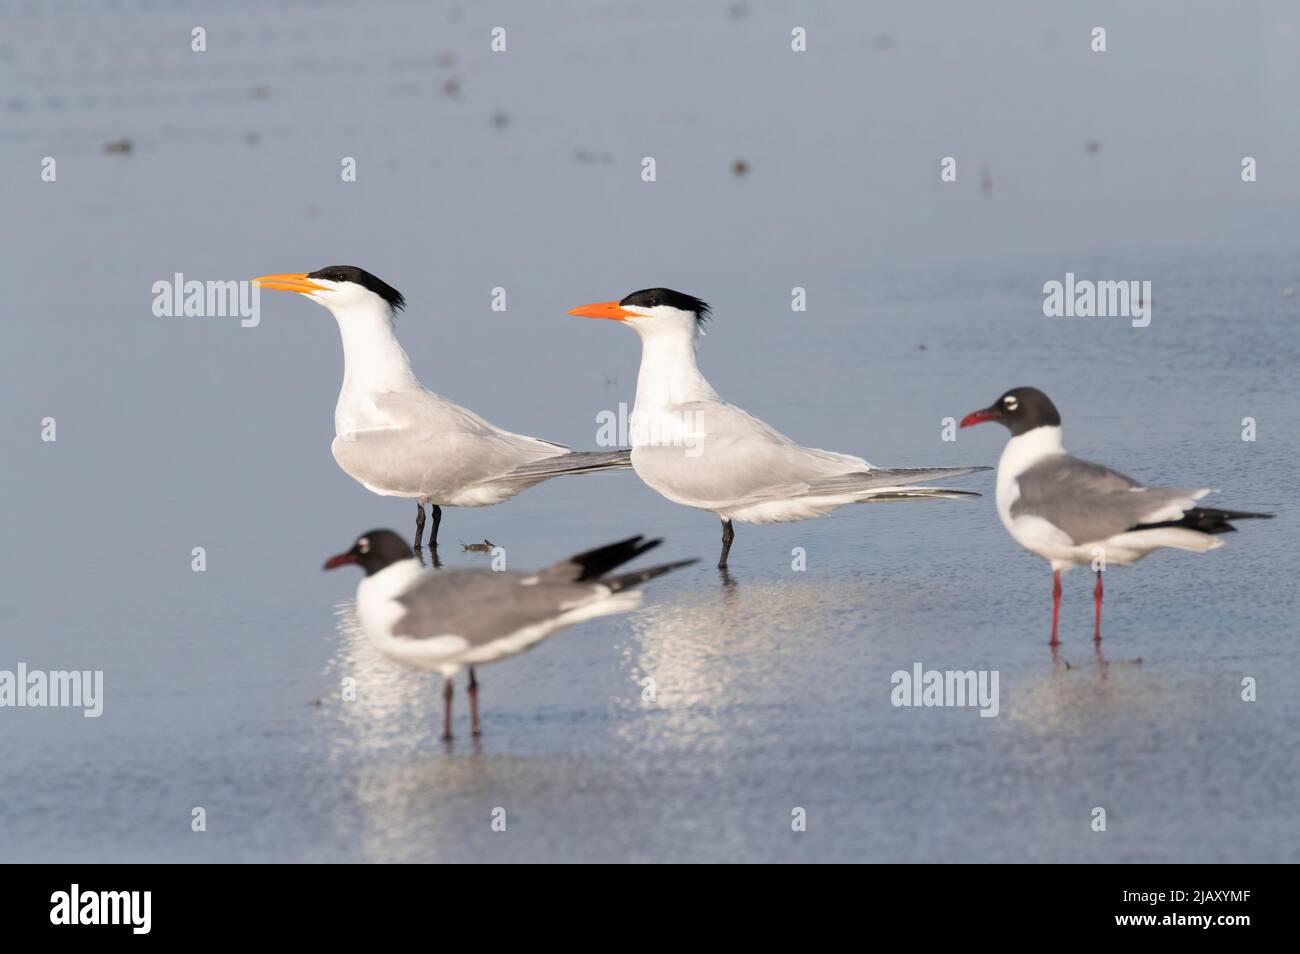 Royal terns and gulls on the beach in Galveston, texas Stock Photo